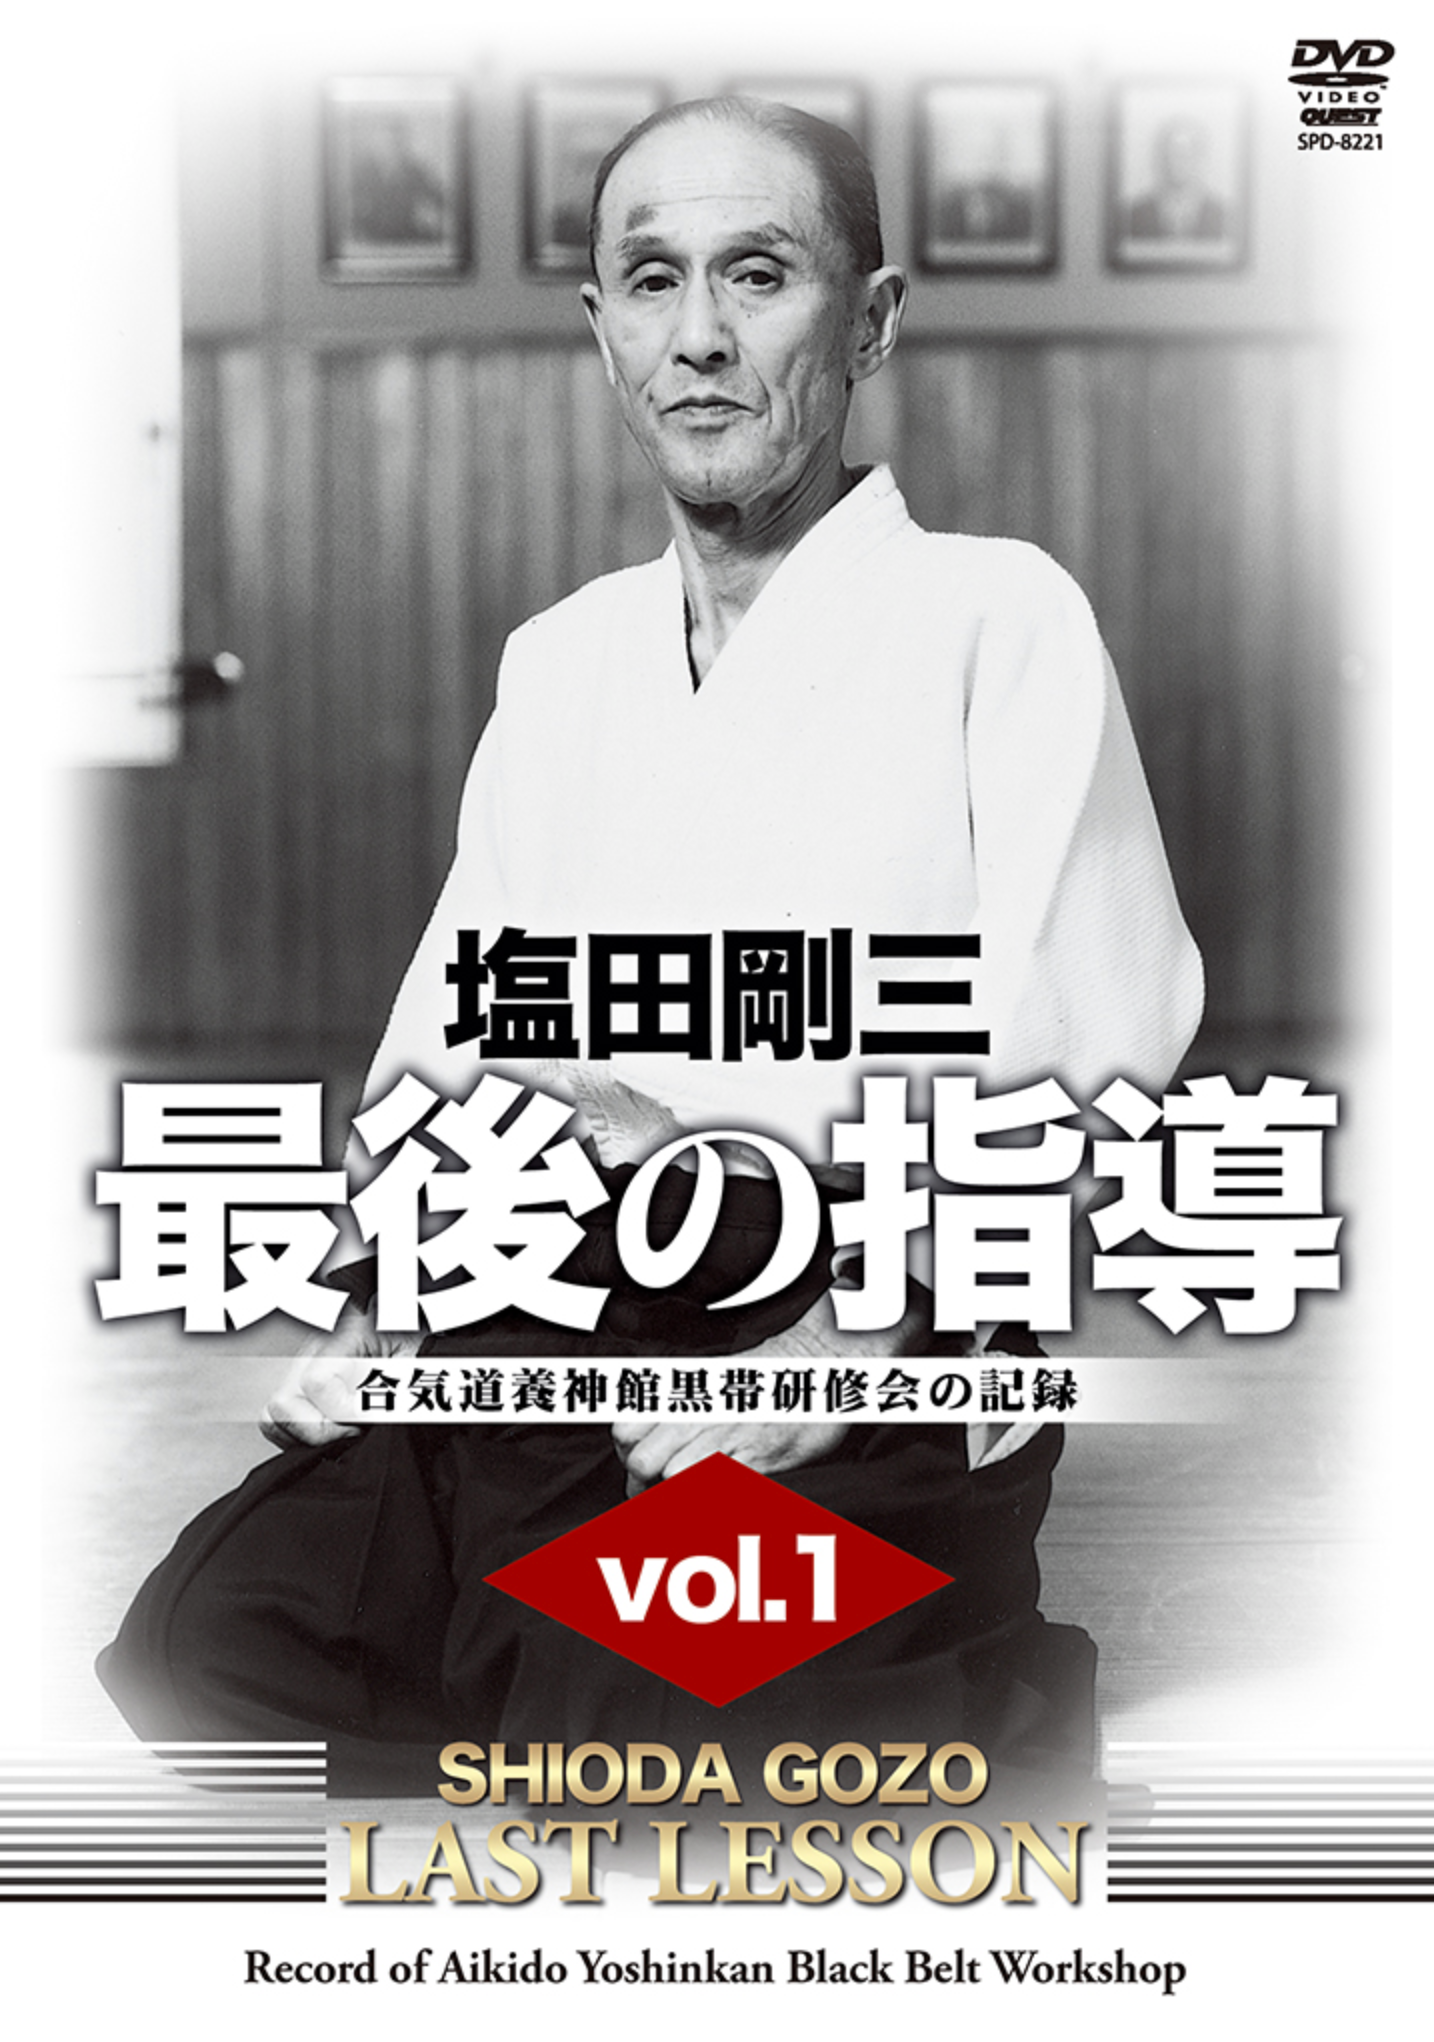 Gozo Shioda Last Lesson DVD 1 Yoshinkan Aikido - Budovideos Inc